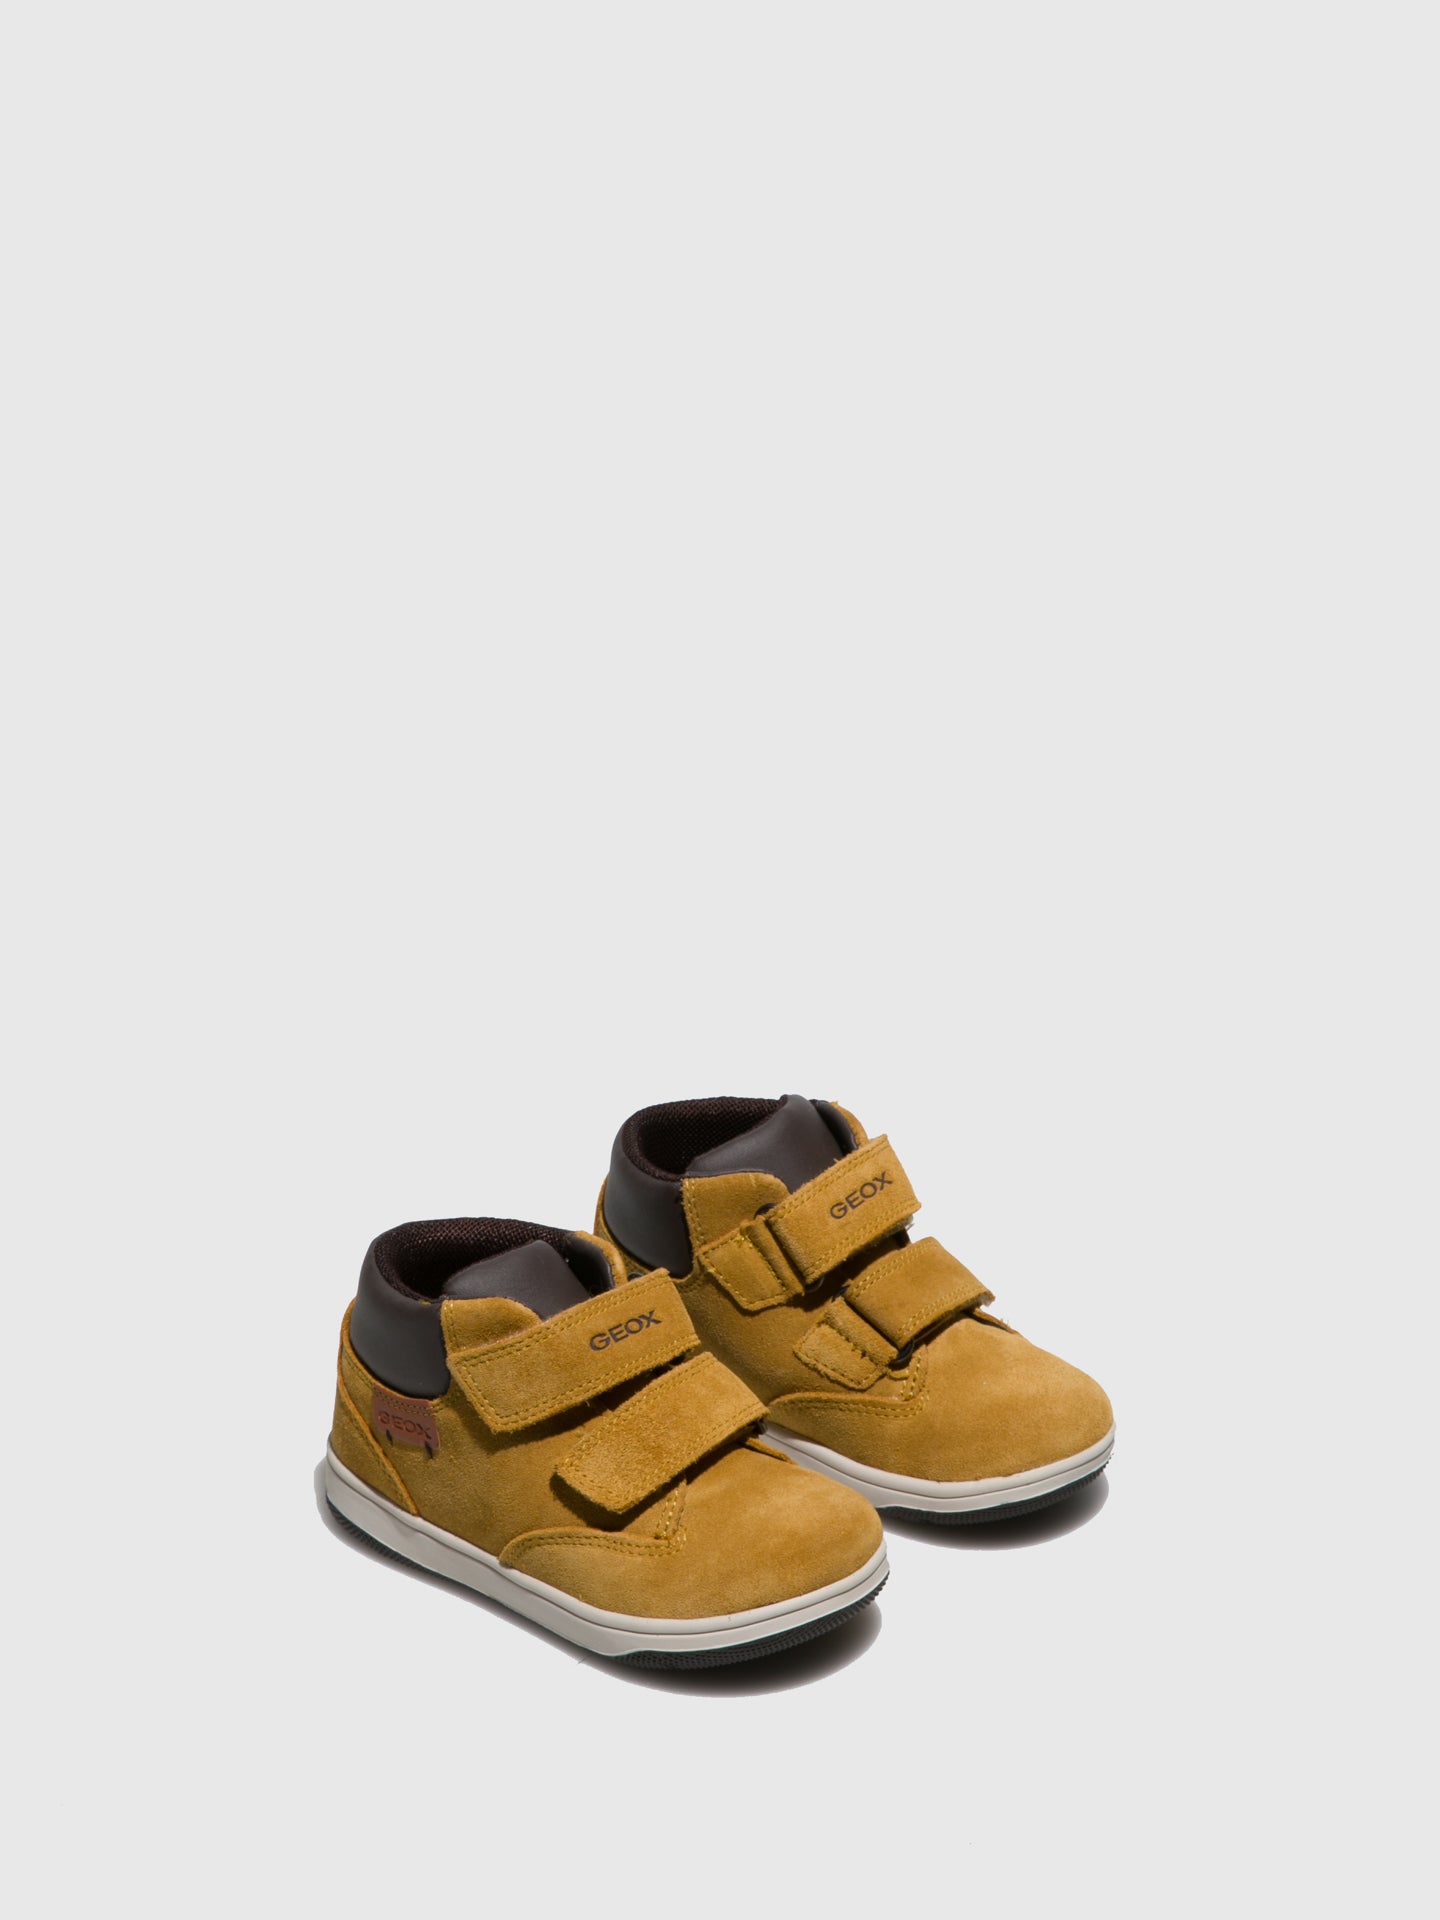 Geox Yellow Velcro Boots